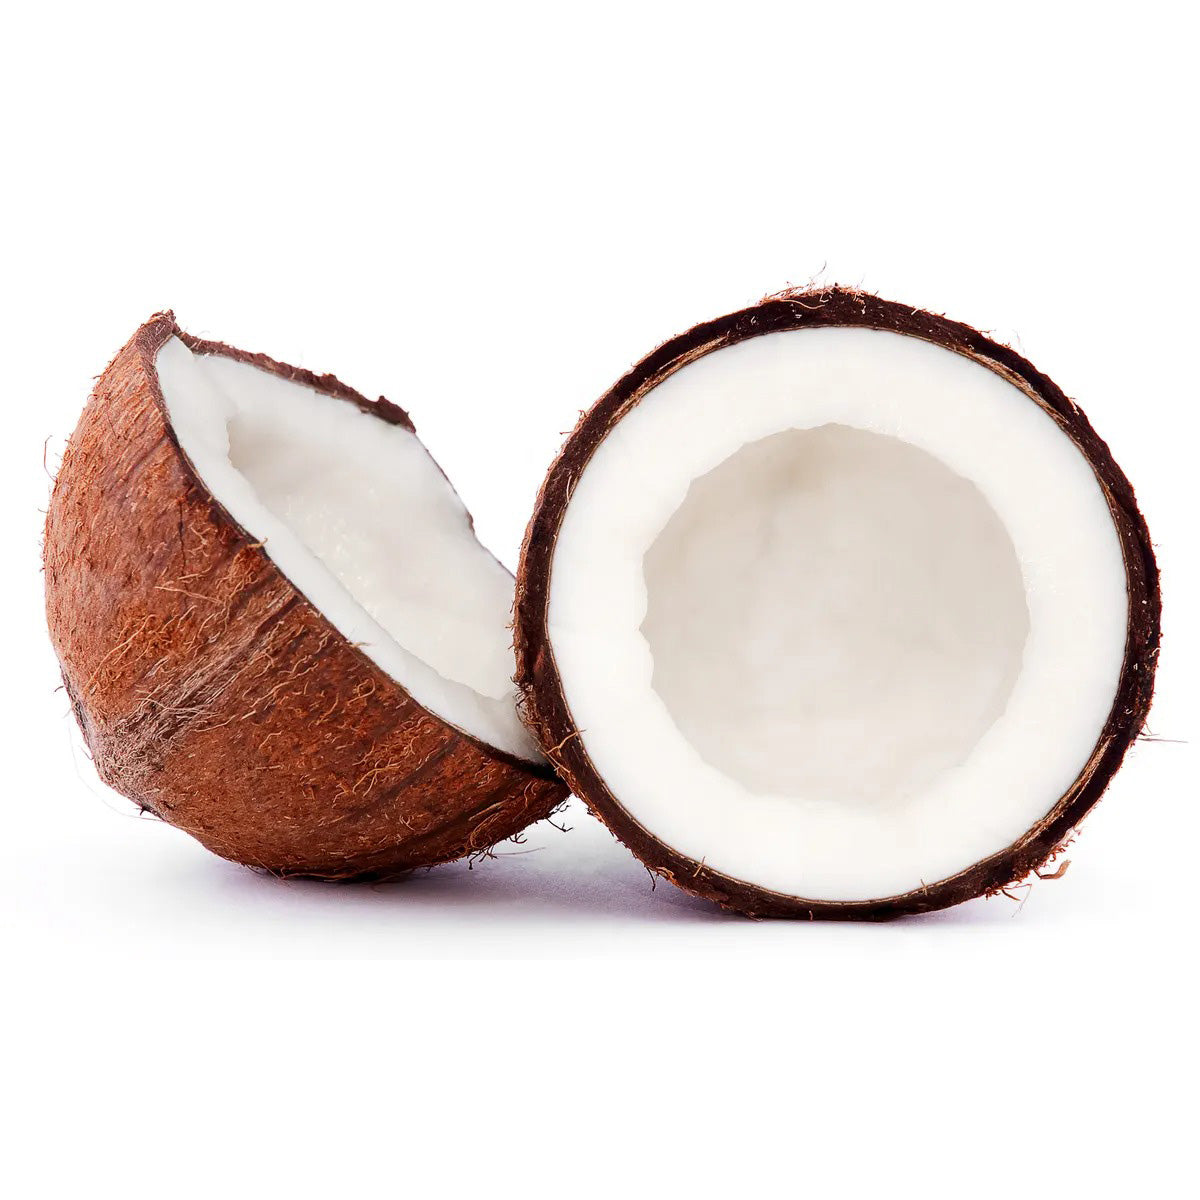 Coconut - Broken in Half, 1 each